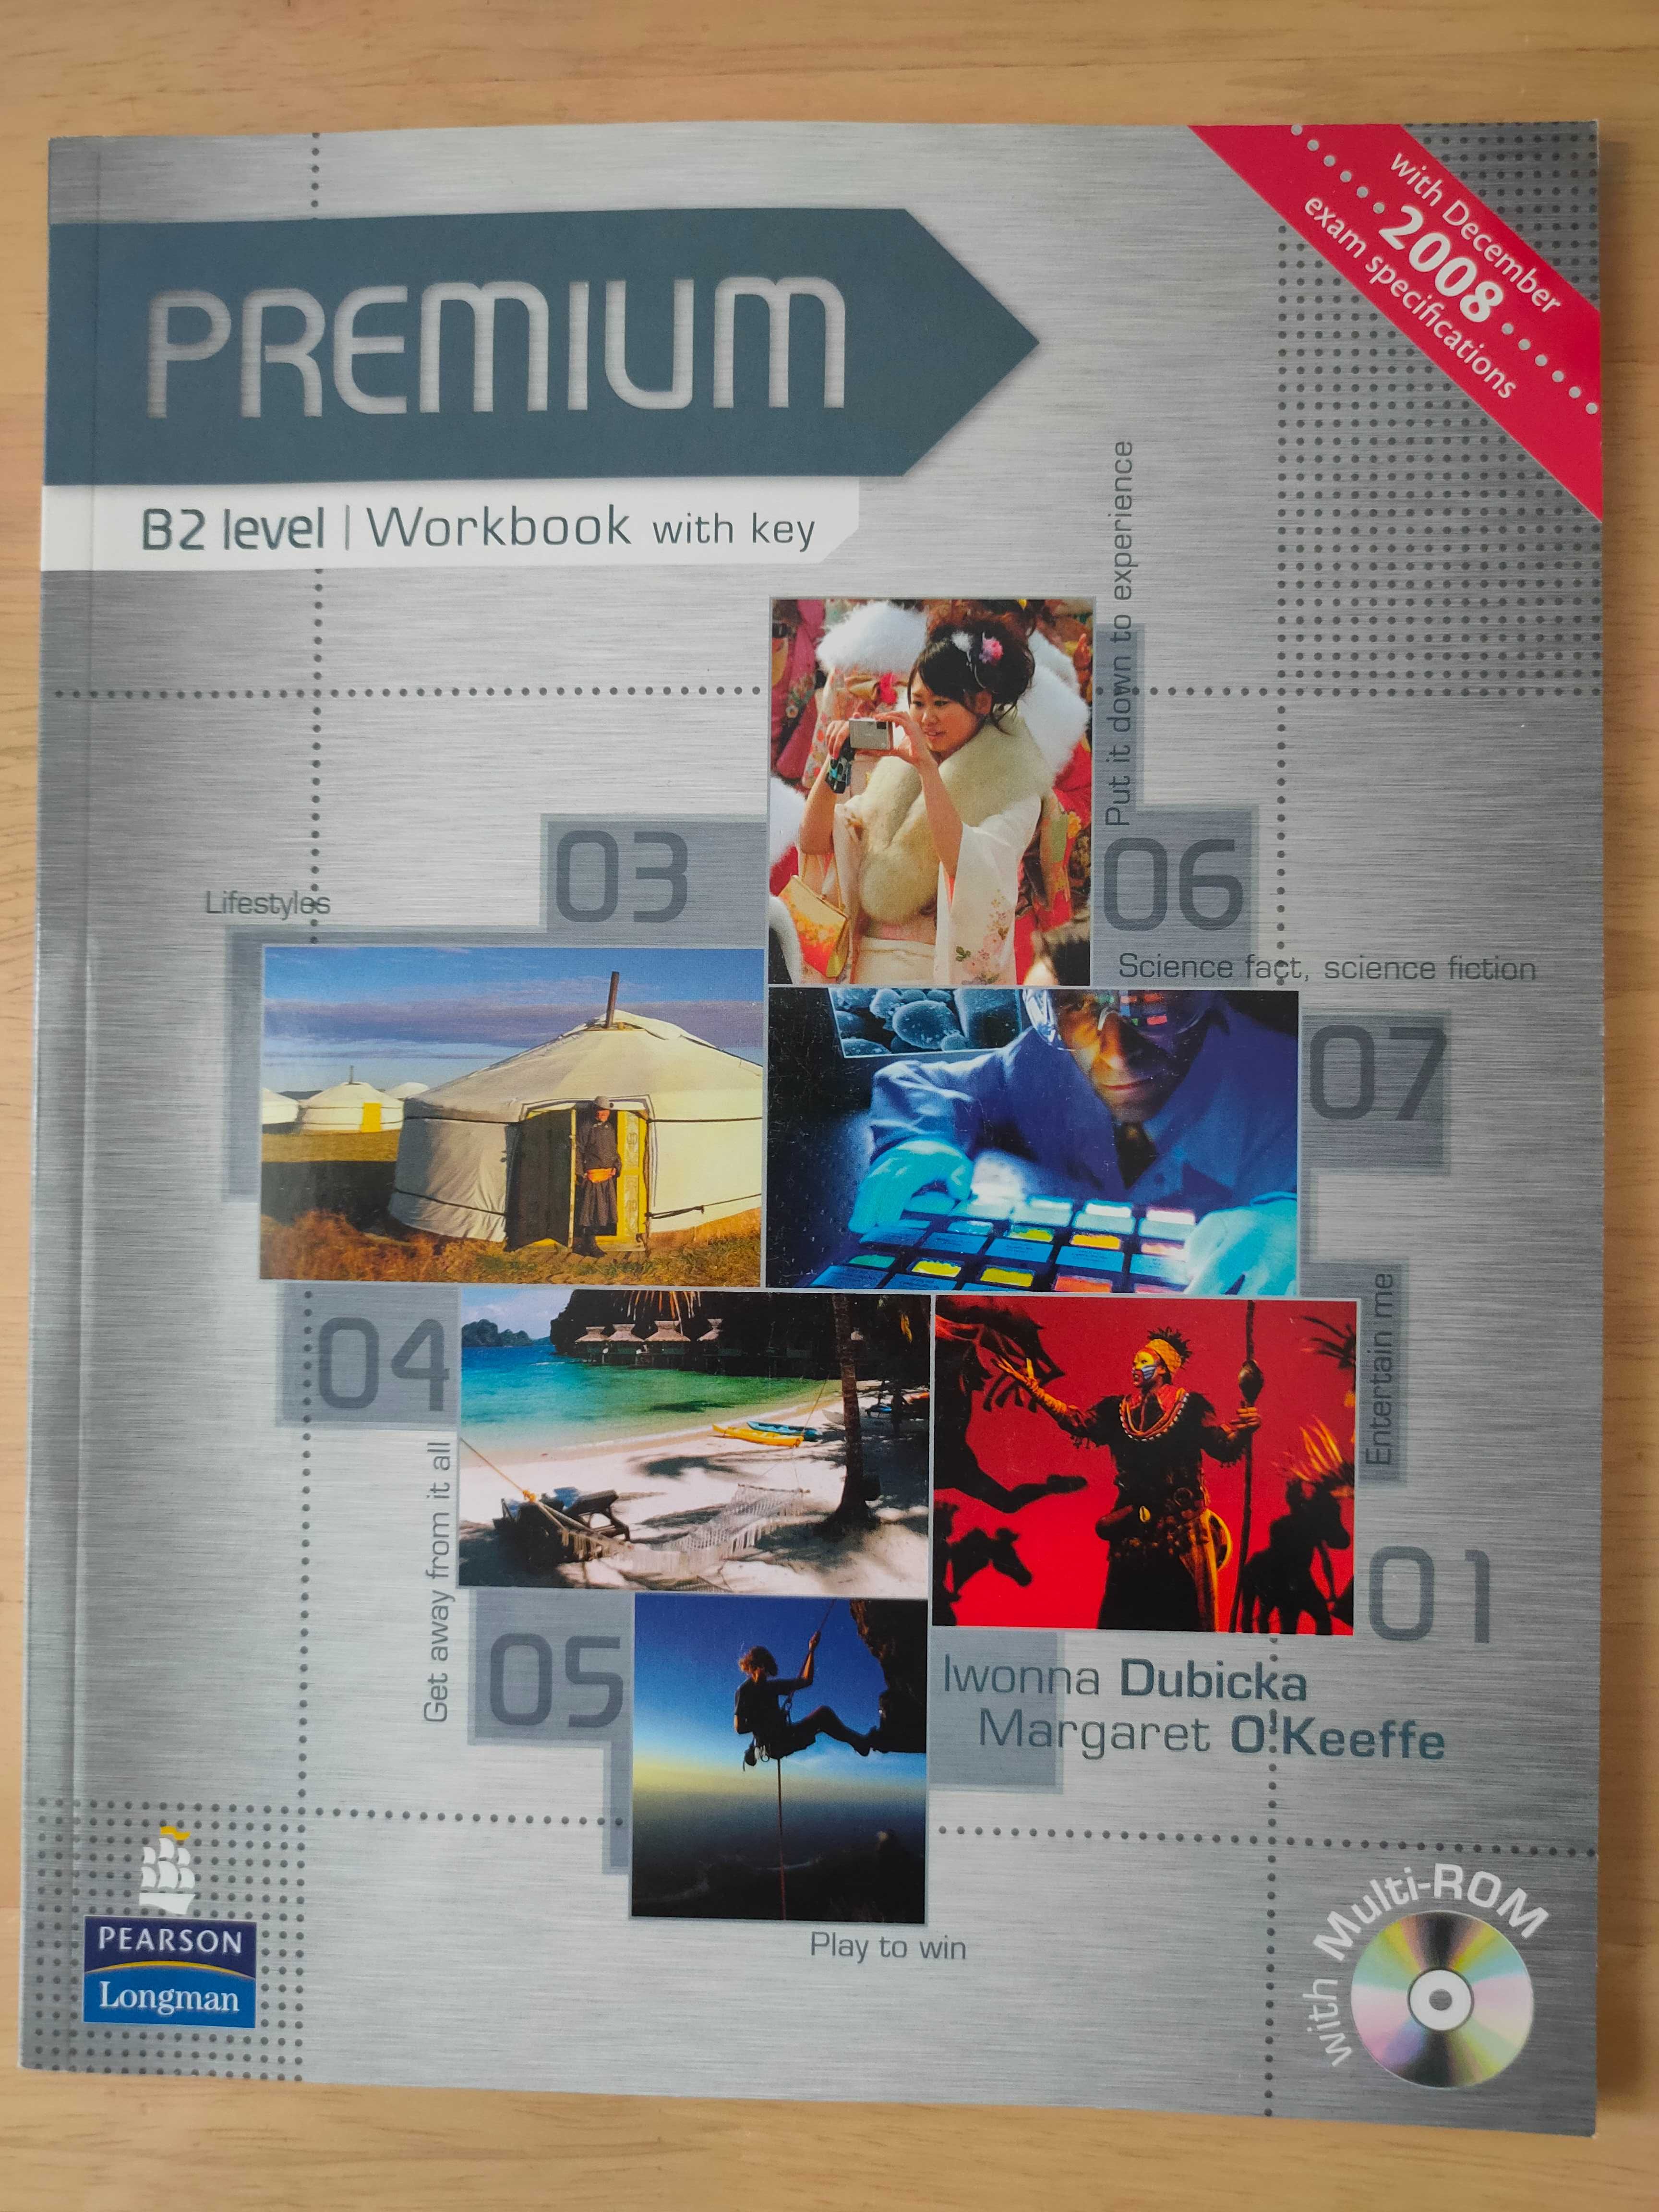 Premium B2 level workbook with key Iwonna Dubicka Margaret O'Keeffe